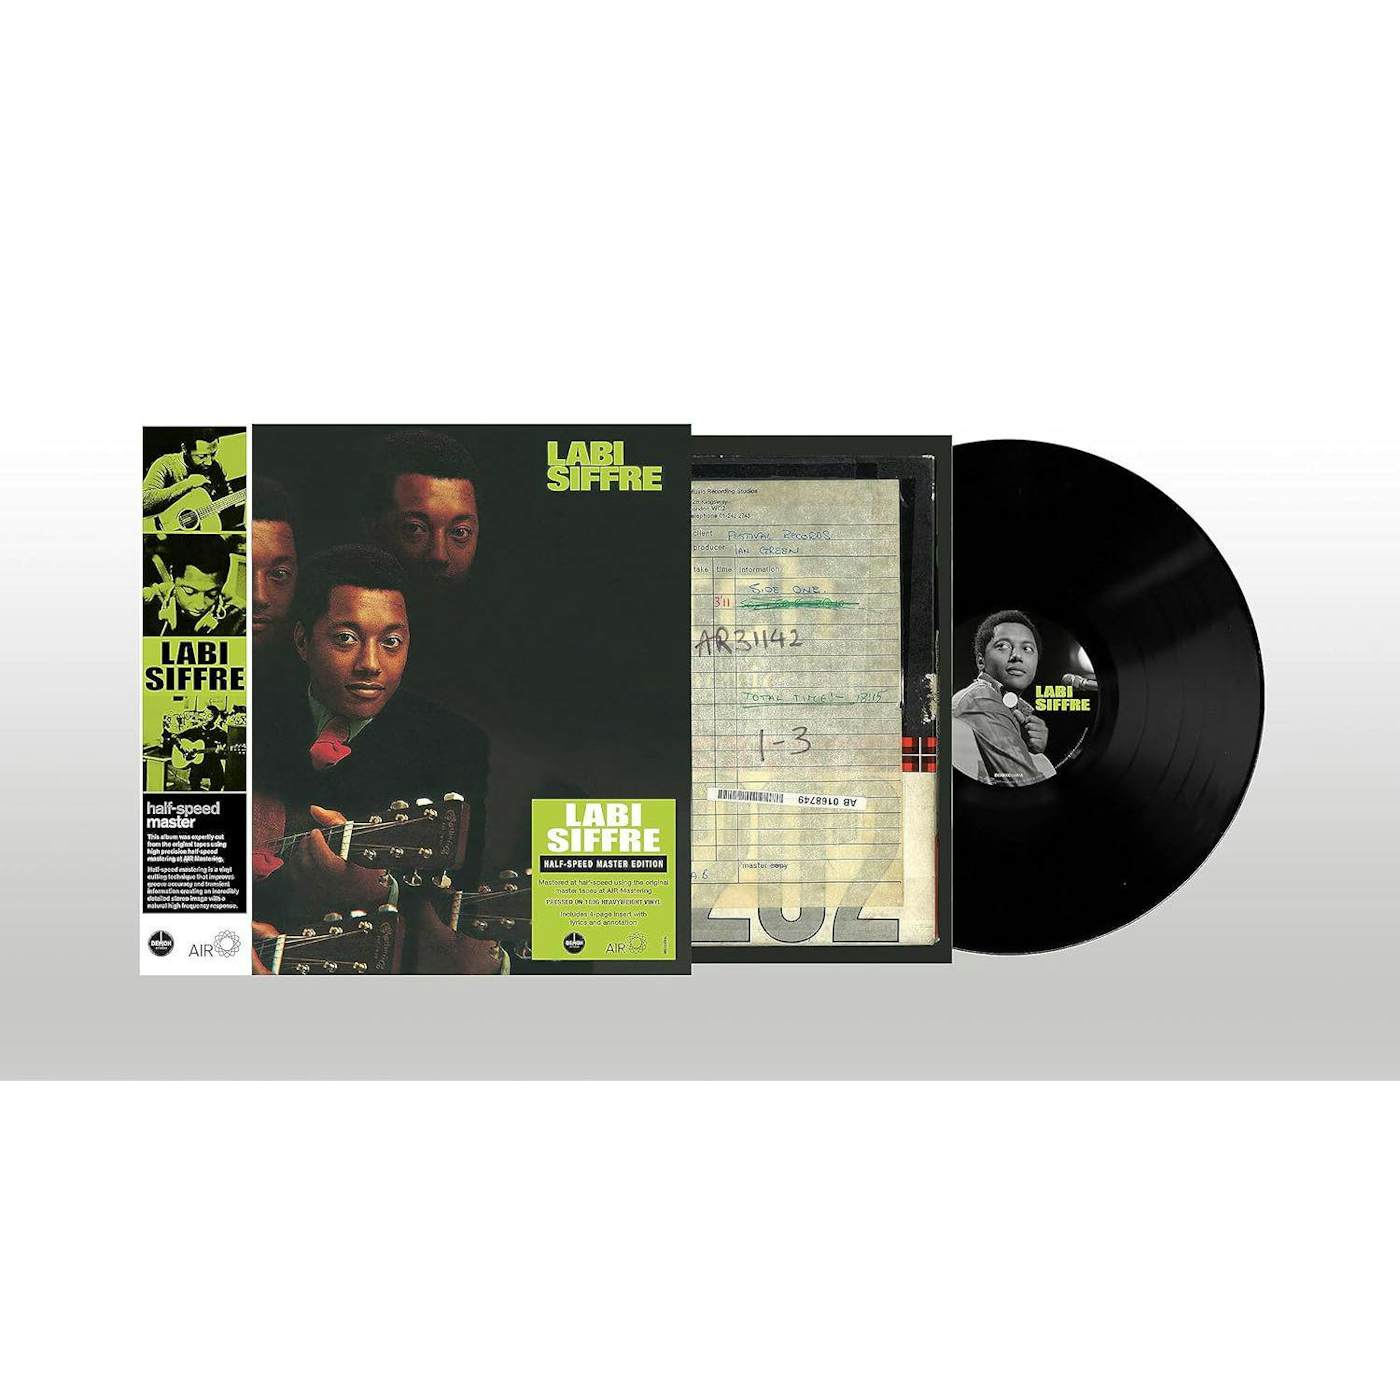  Labi Siffre (180 Gram/Half-Speed Master Black) Vinyl Record